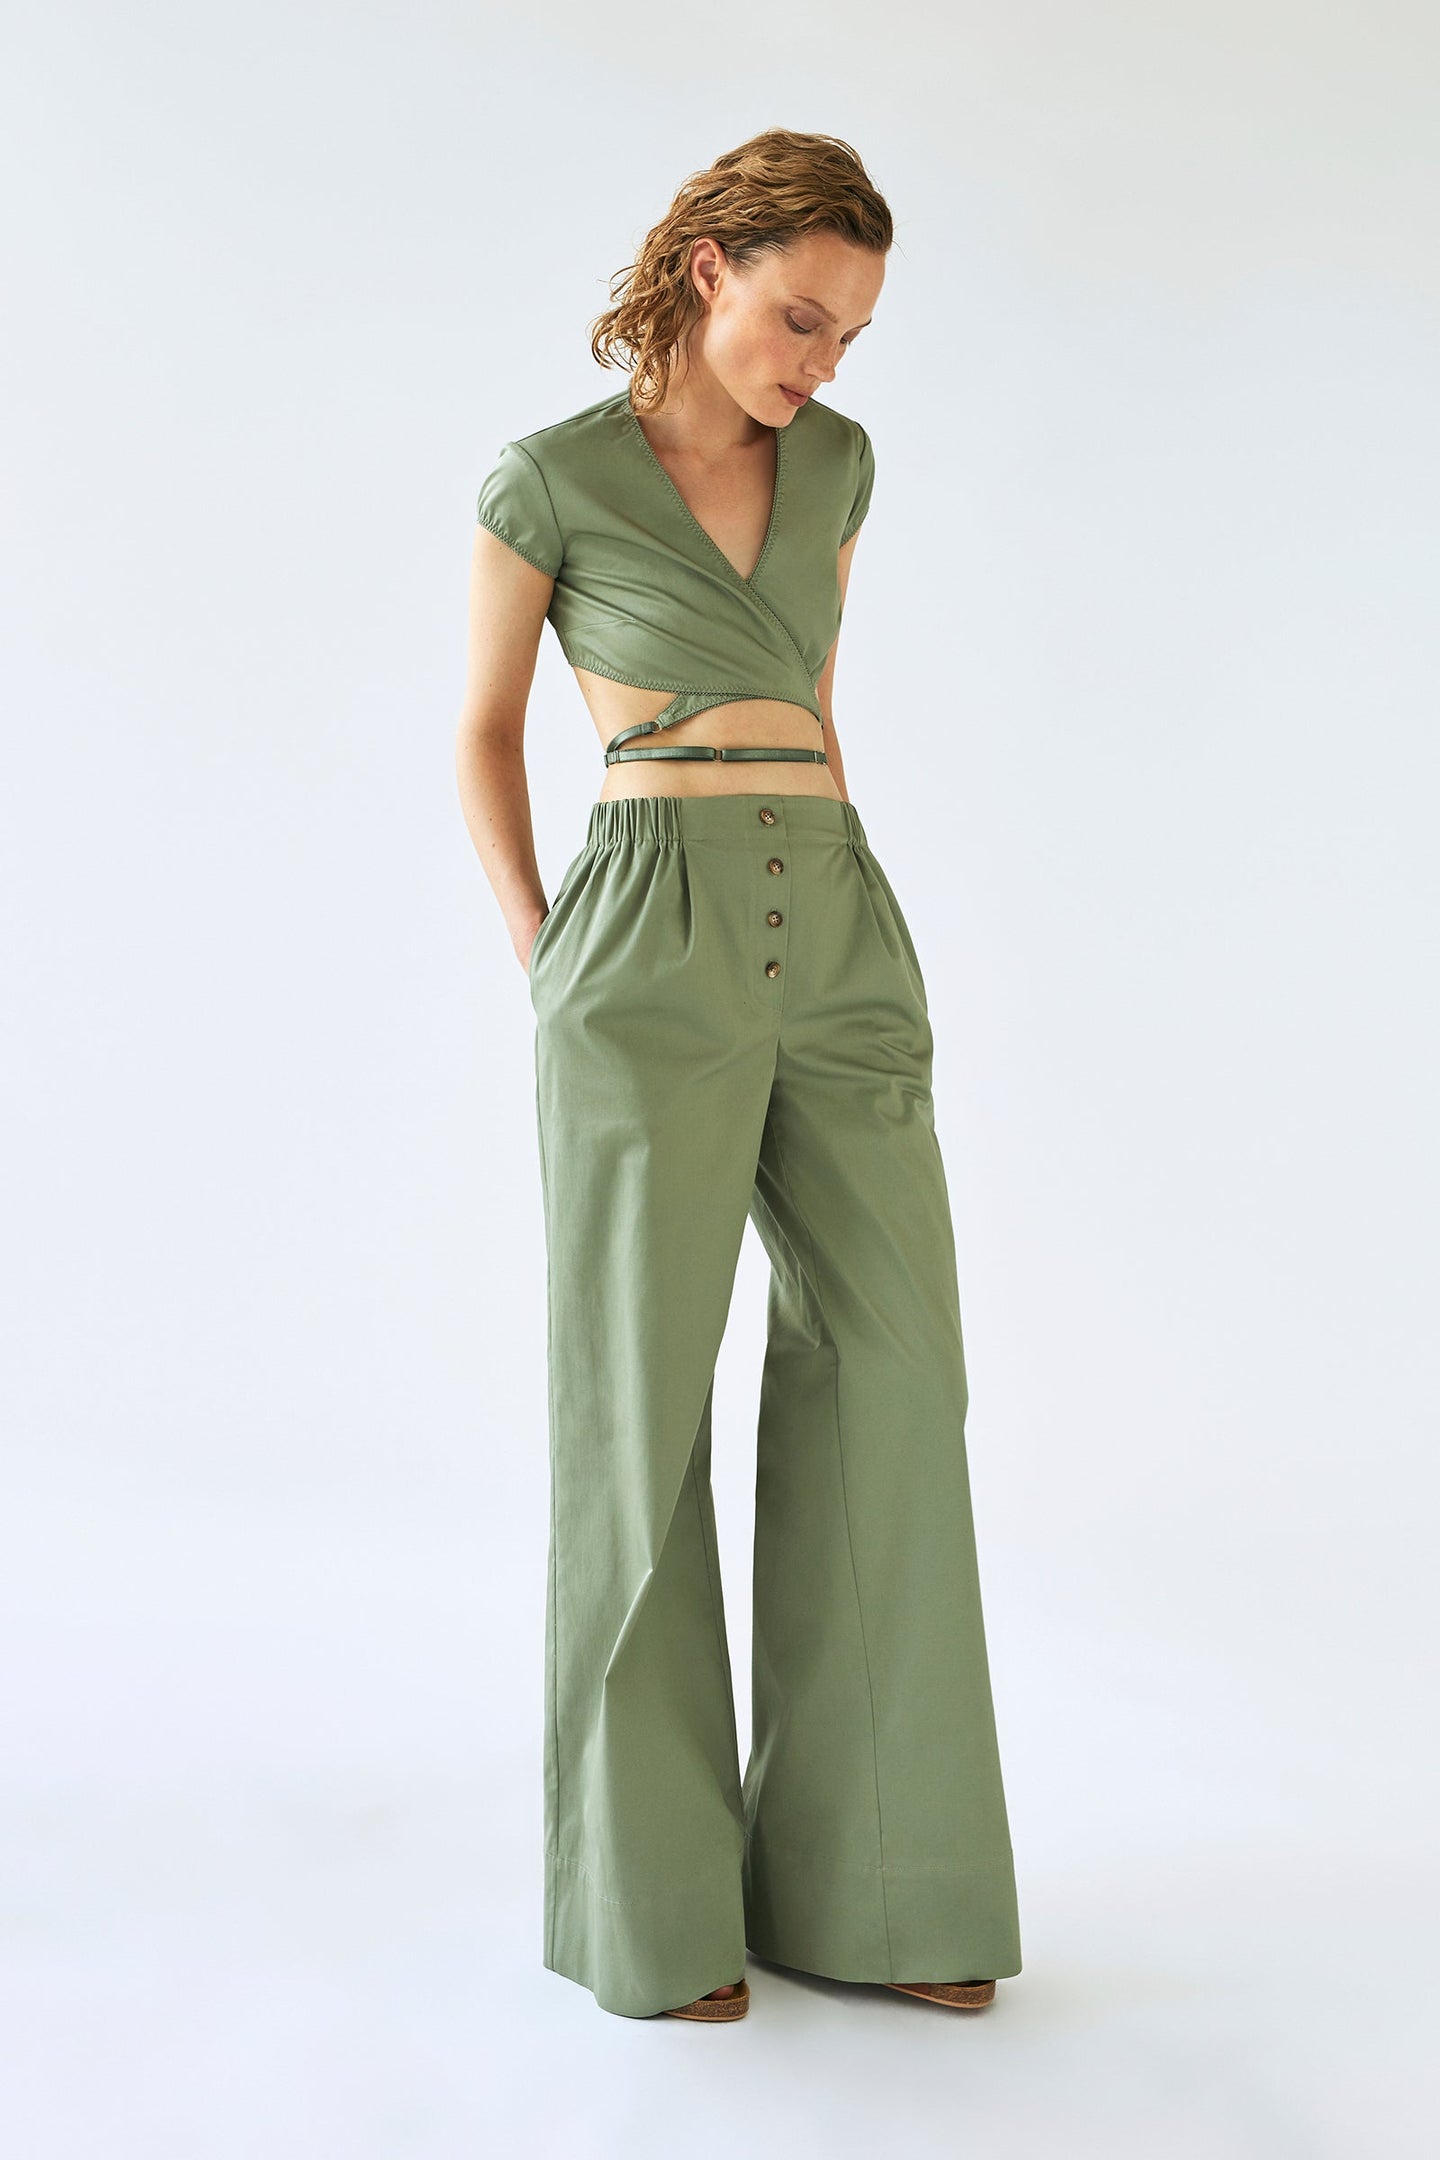 Model in olive Melba trousers